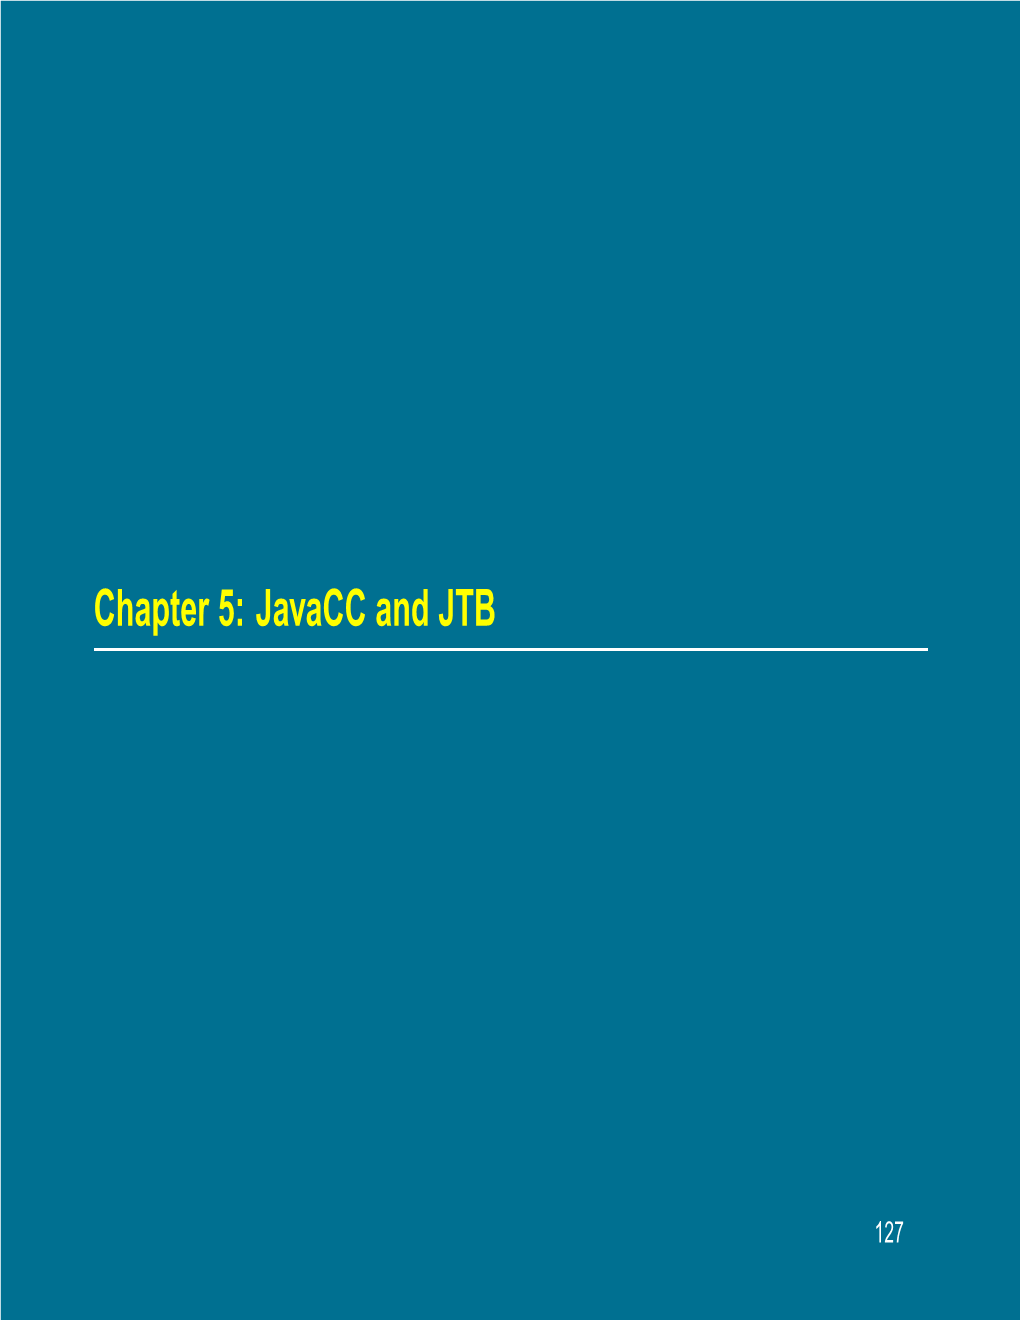 Javacc and JTB